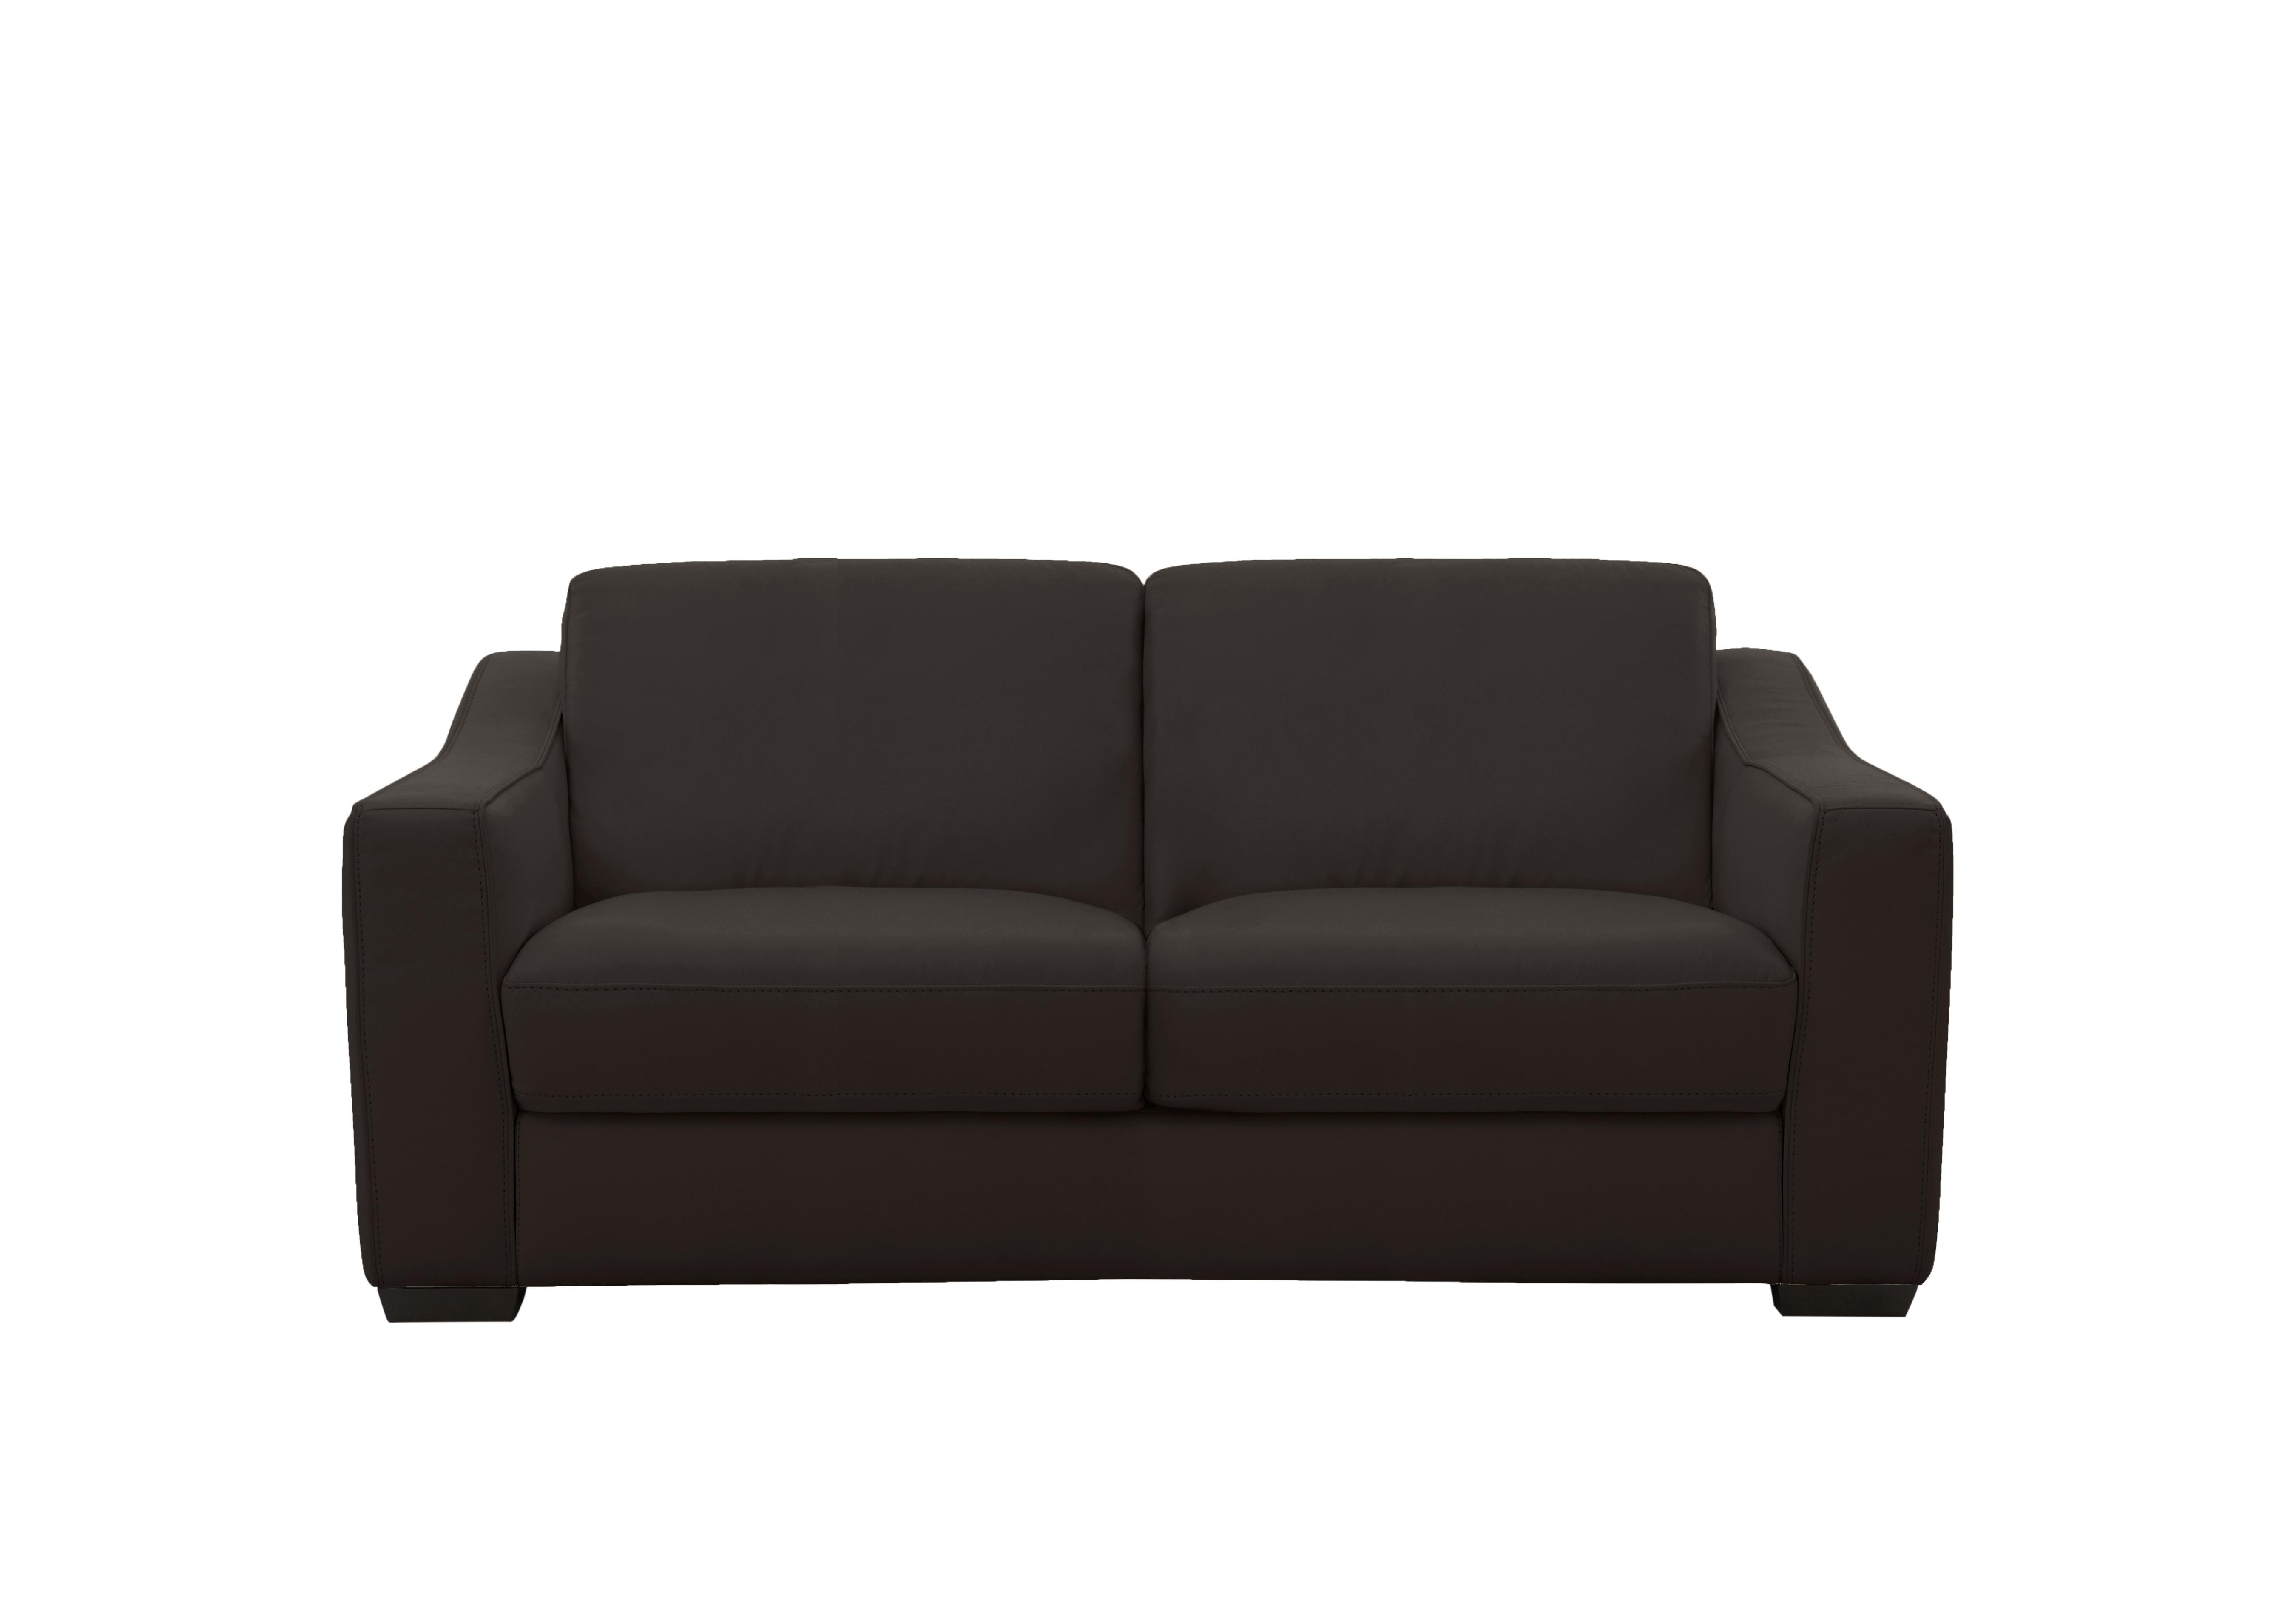 Optimus 2 Seater Leather Sofa in Bv-1748 Dark Chocolate on Furniture Village